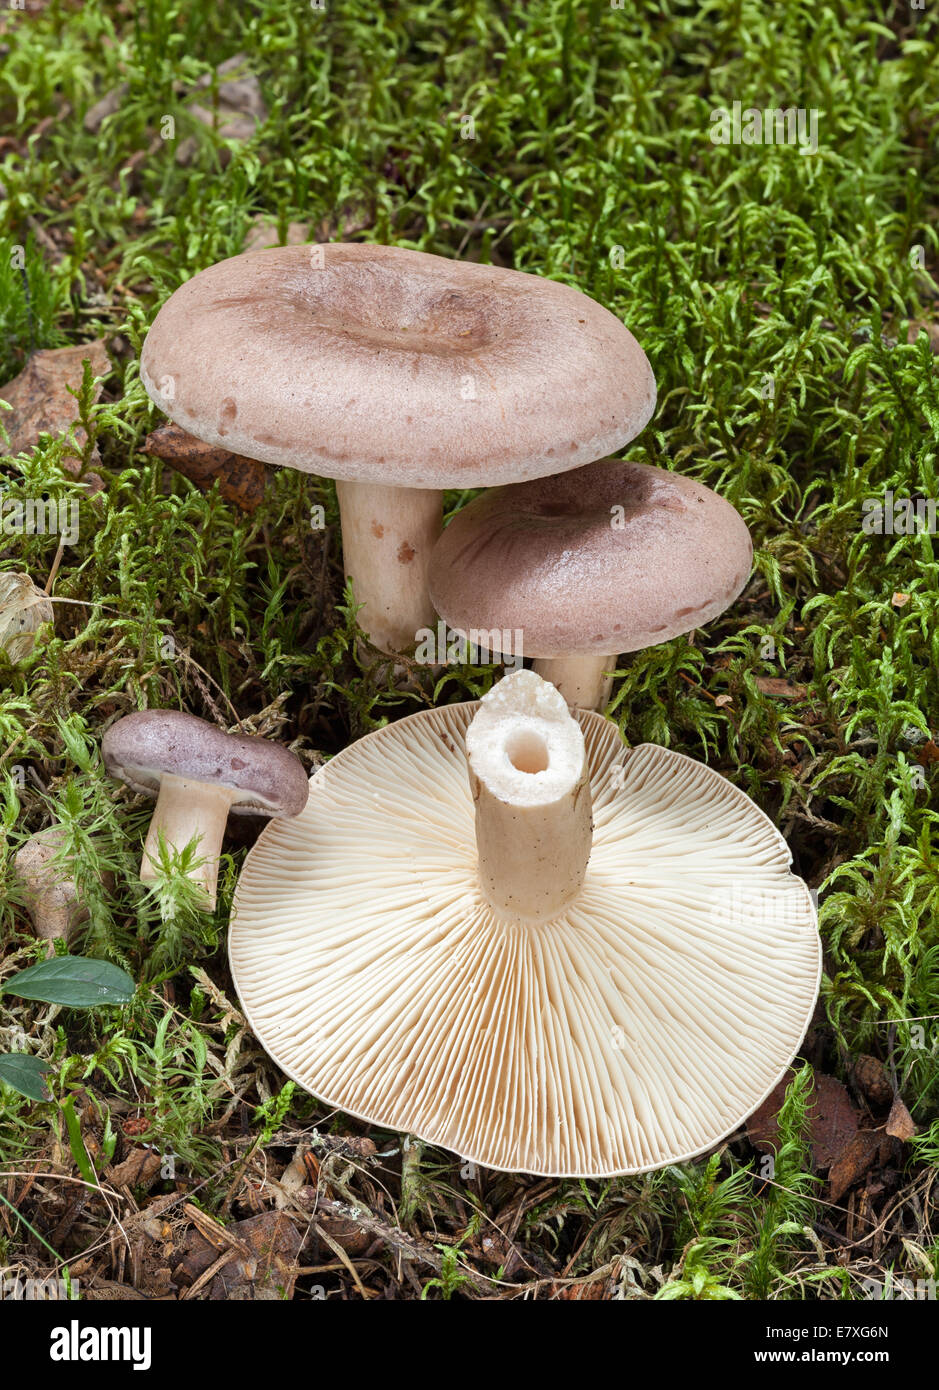 Lactarius trivialis mushrooms Stock Photo